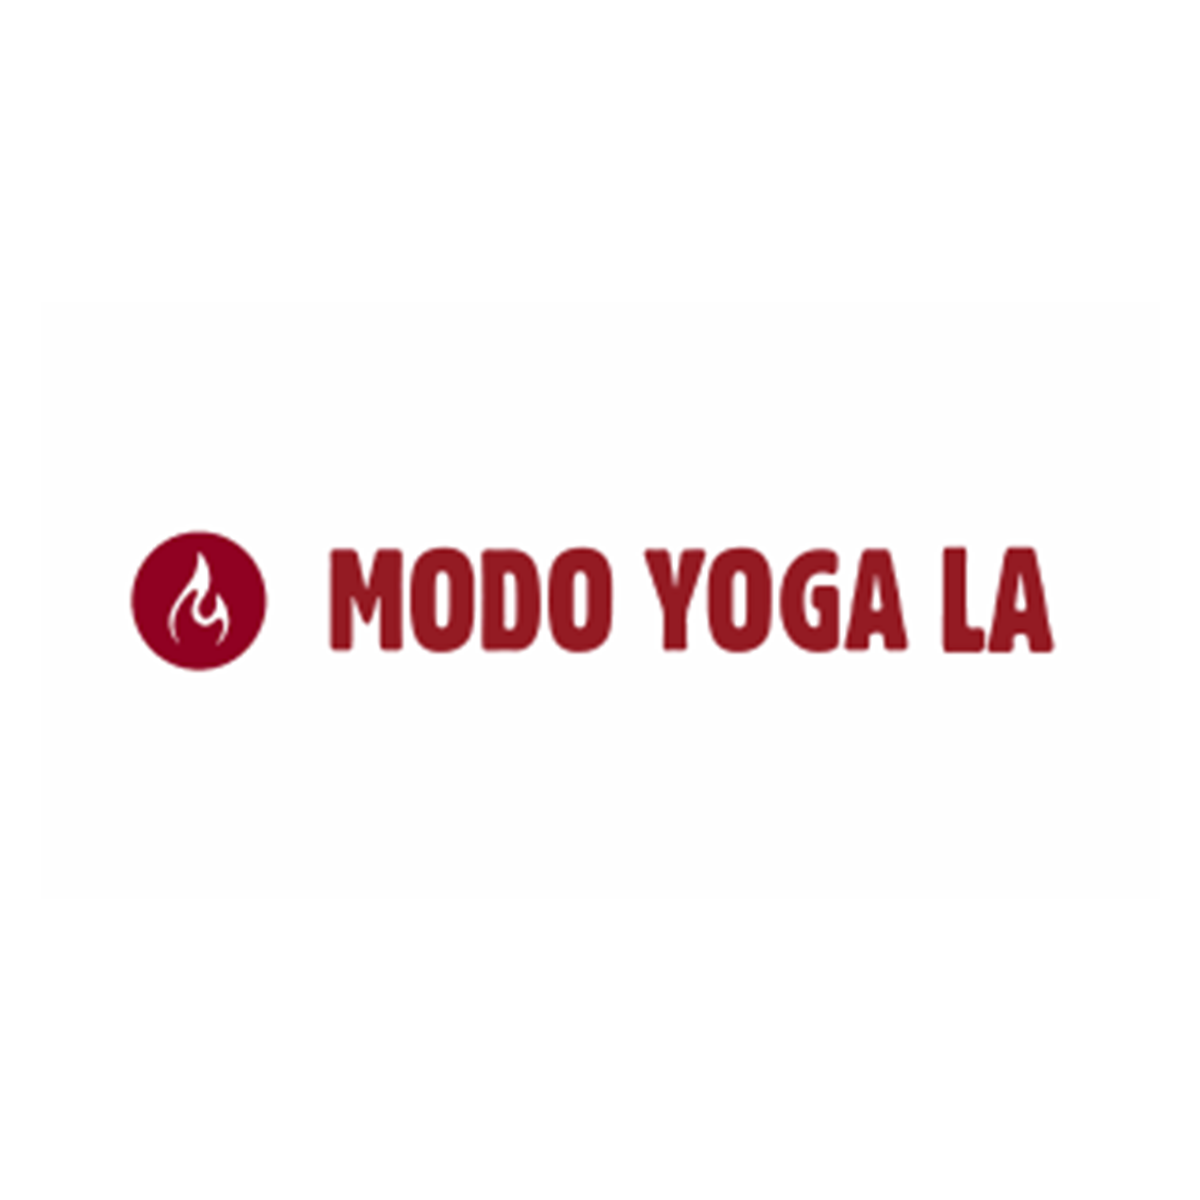 Modo yoga